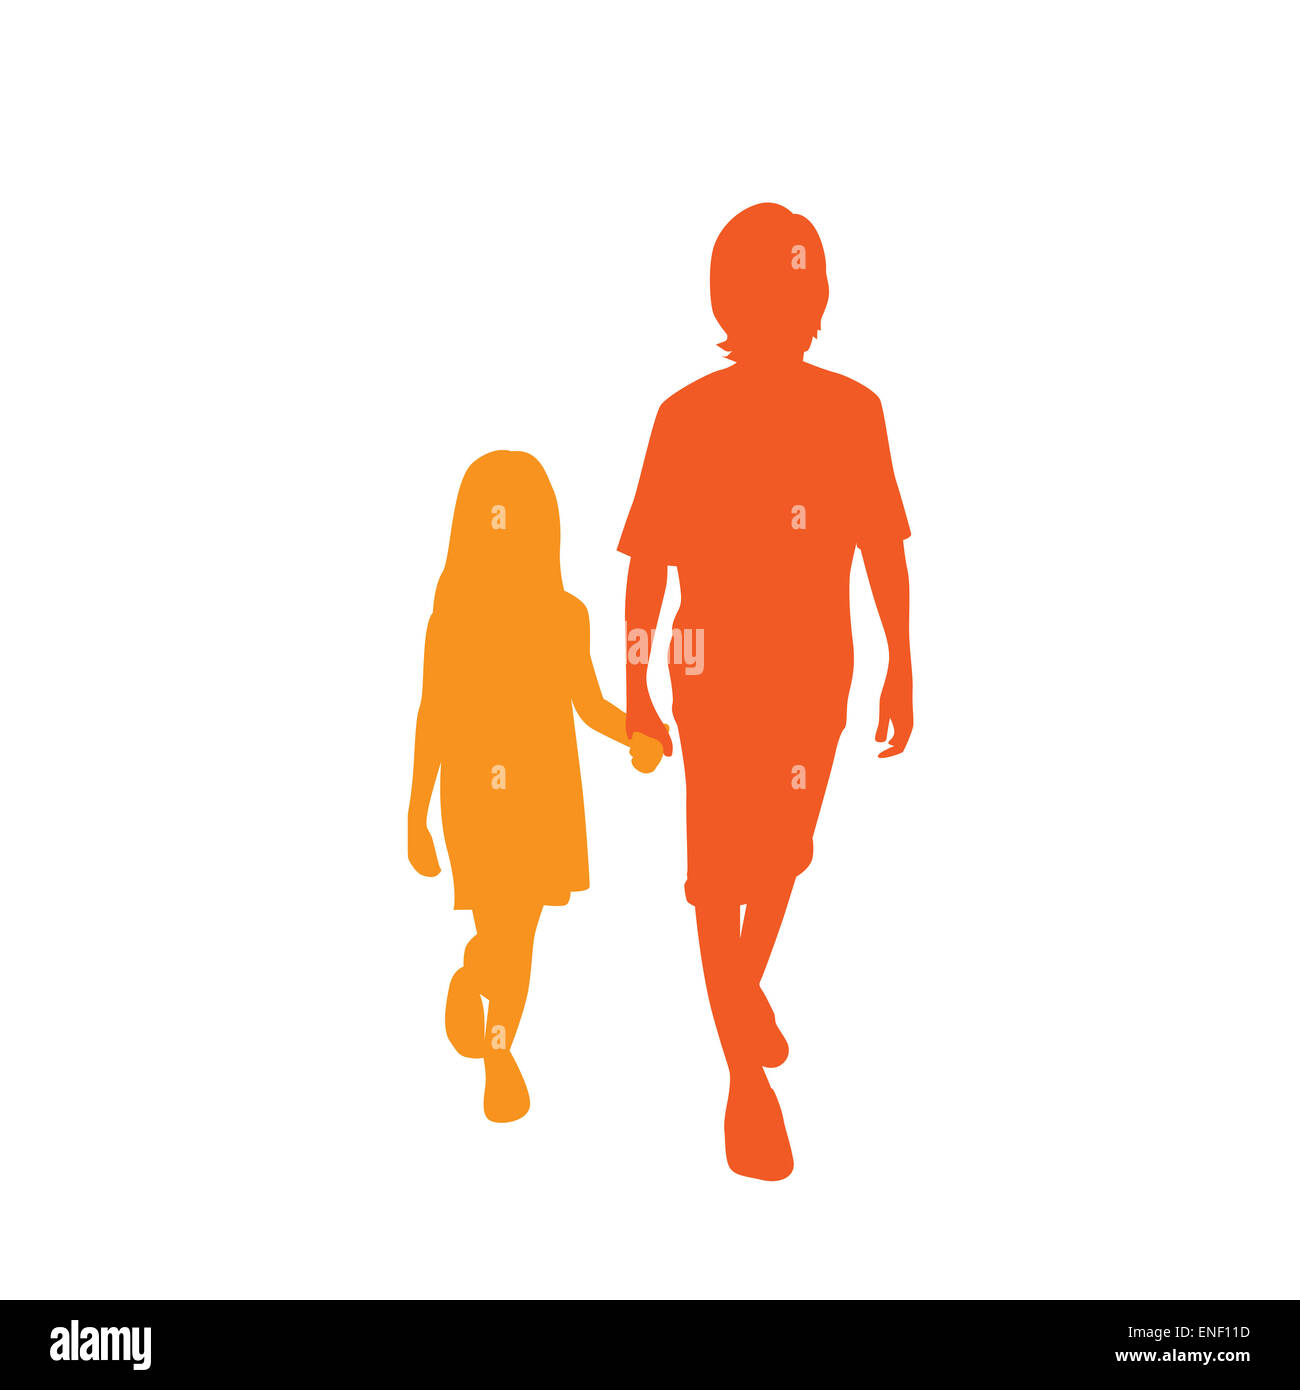 Children Silhouette, Full Length Boy and Girl Holding Hands Stock Photo